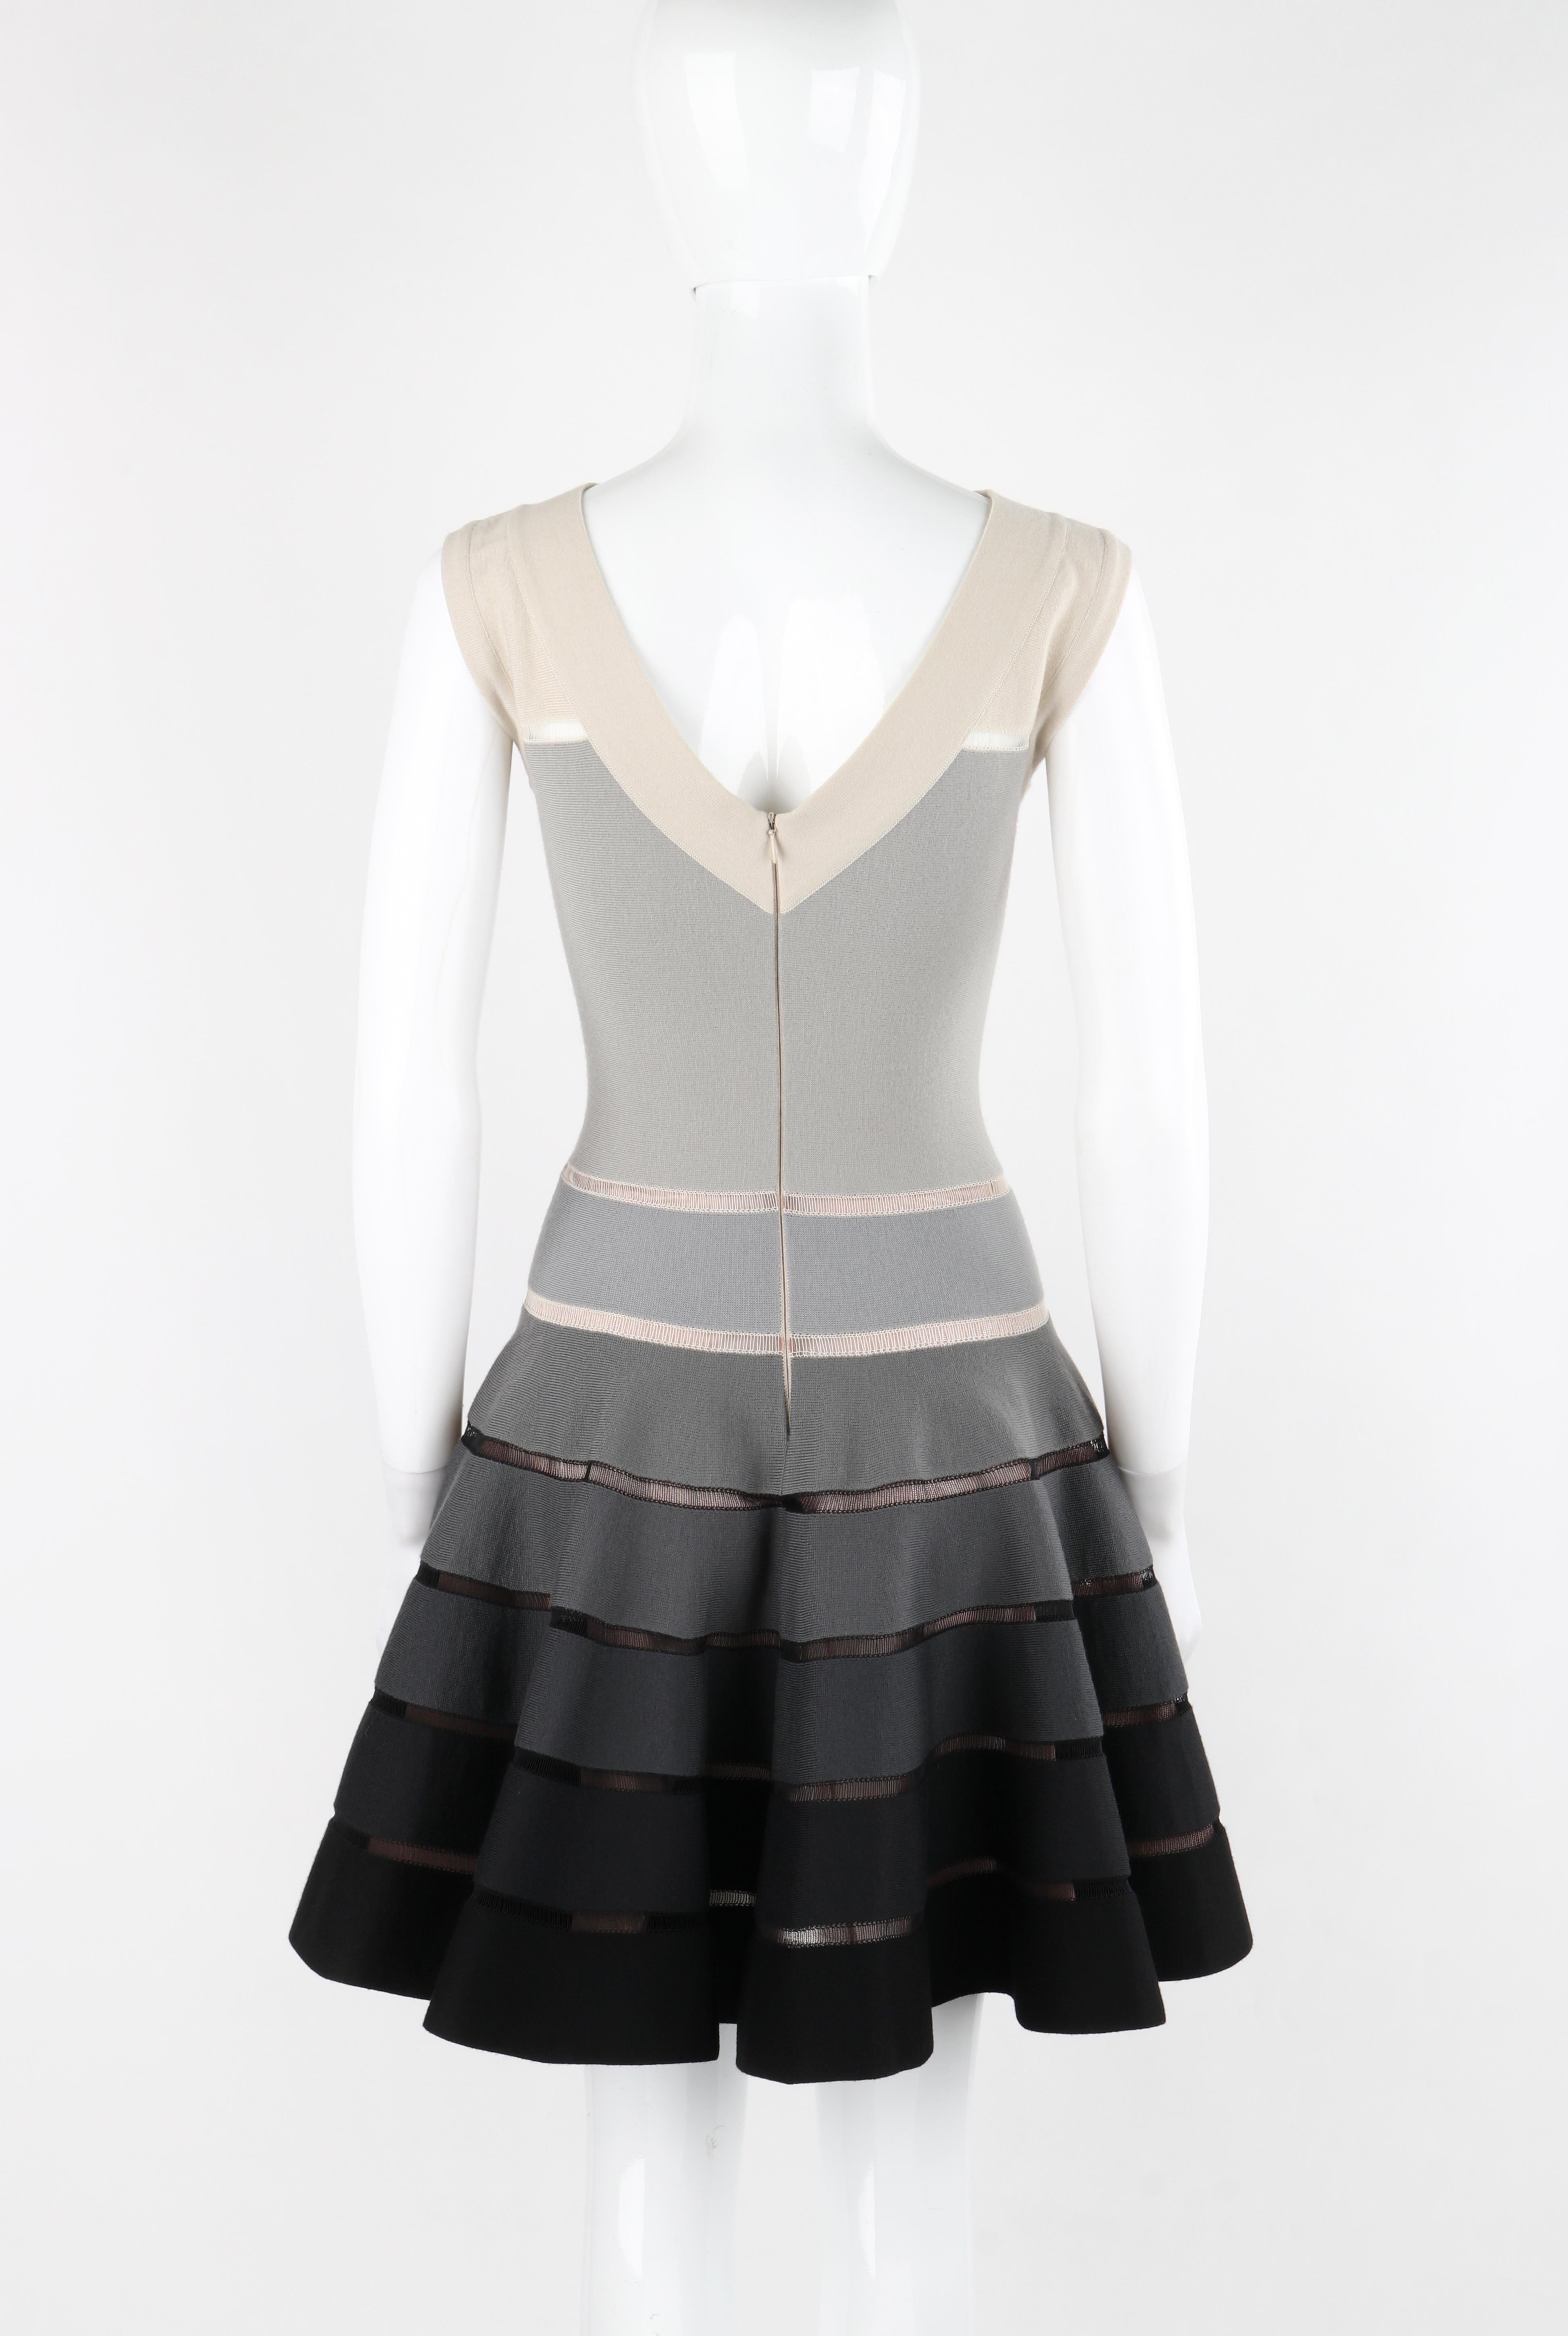 ALAIA PARIS c. 2010 Monochrome Ombre Wool Silk Fit & Flare Skater Mini Dress For Sale 1